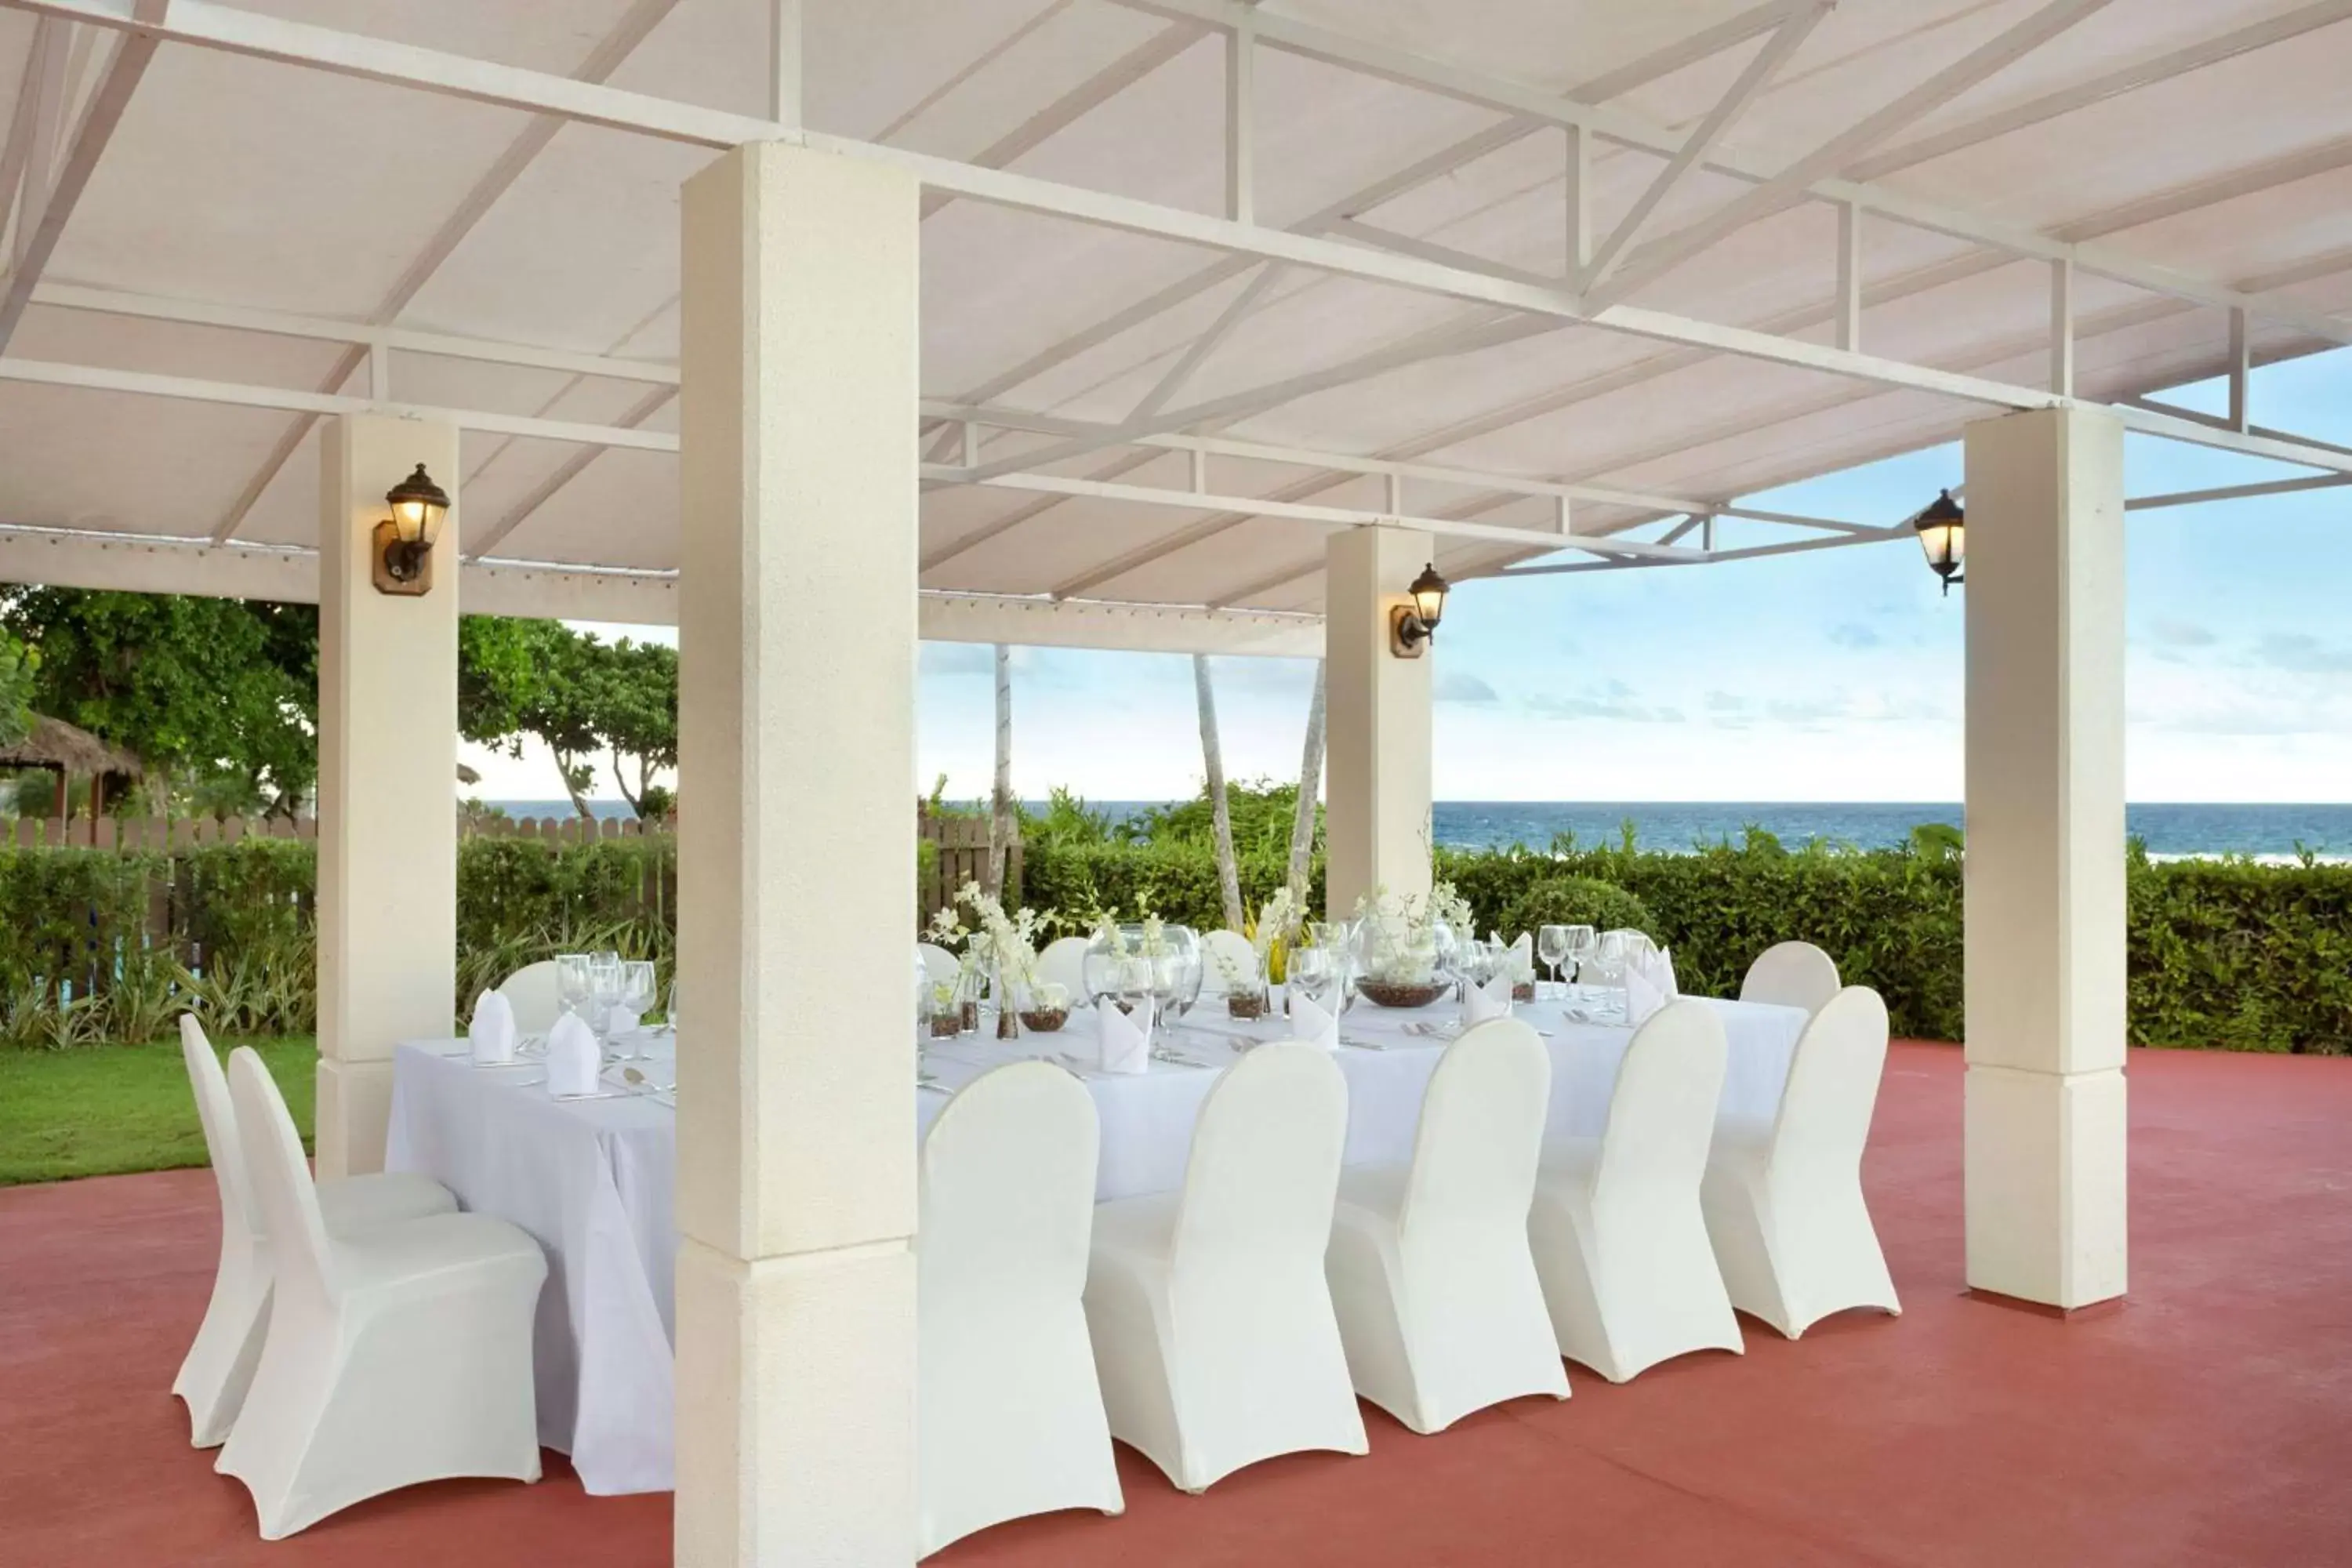 Dining area, Banquet Facilities in Hilton Guam Resort & Spa